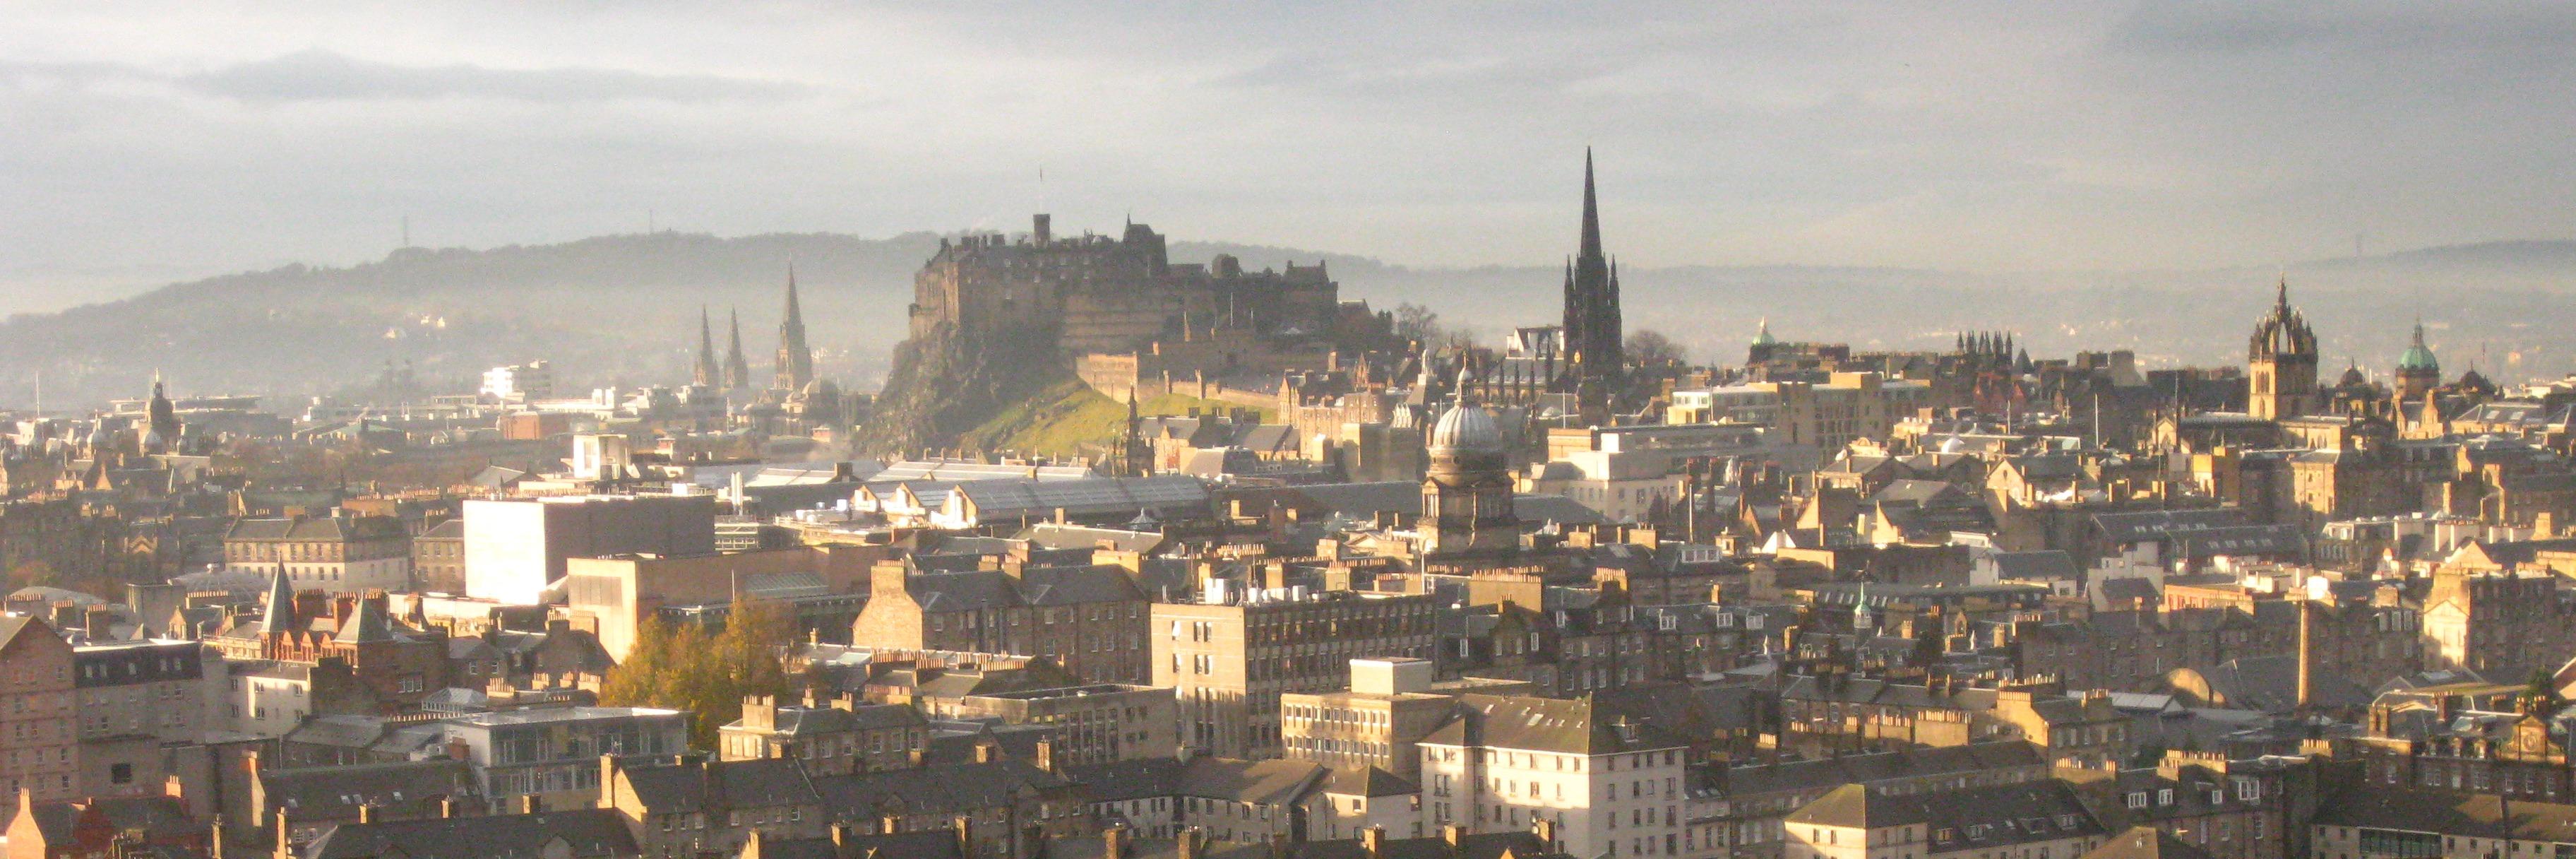 Aerial shot of Edinburgh. 